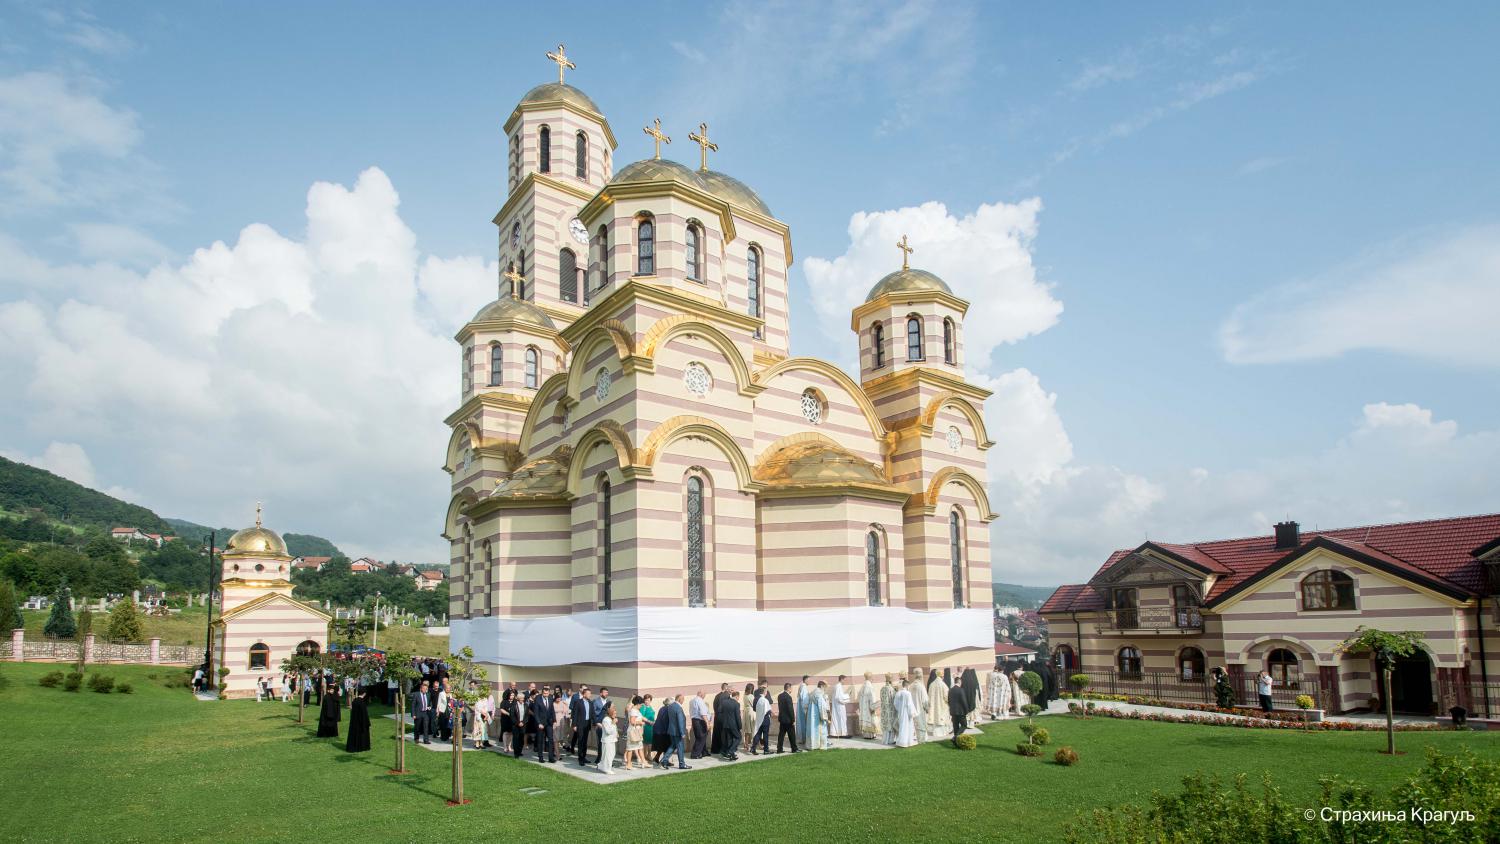 Patriarch Consecrates Saint Sava Church in Mrkonjic Grad